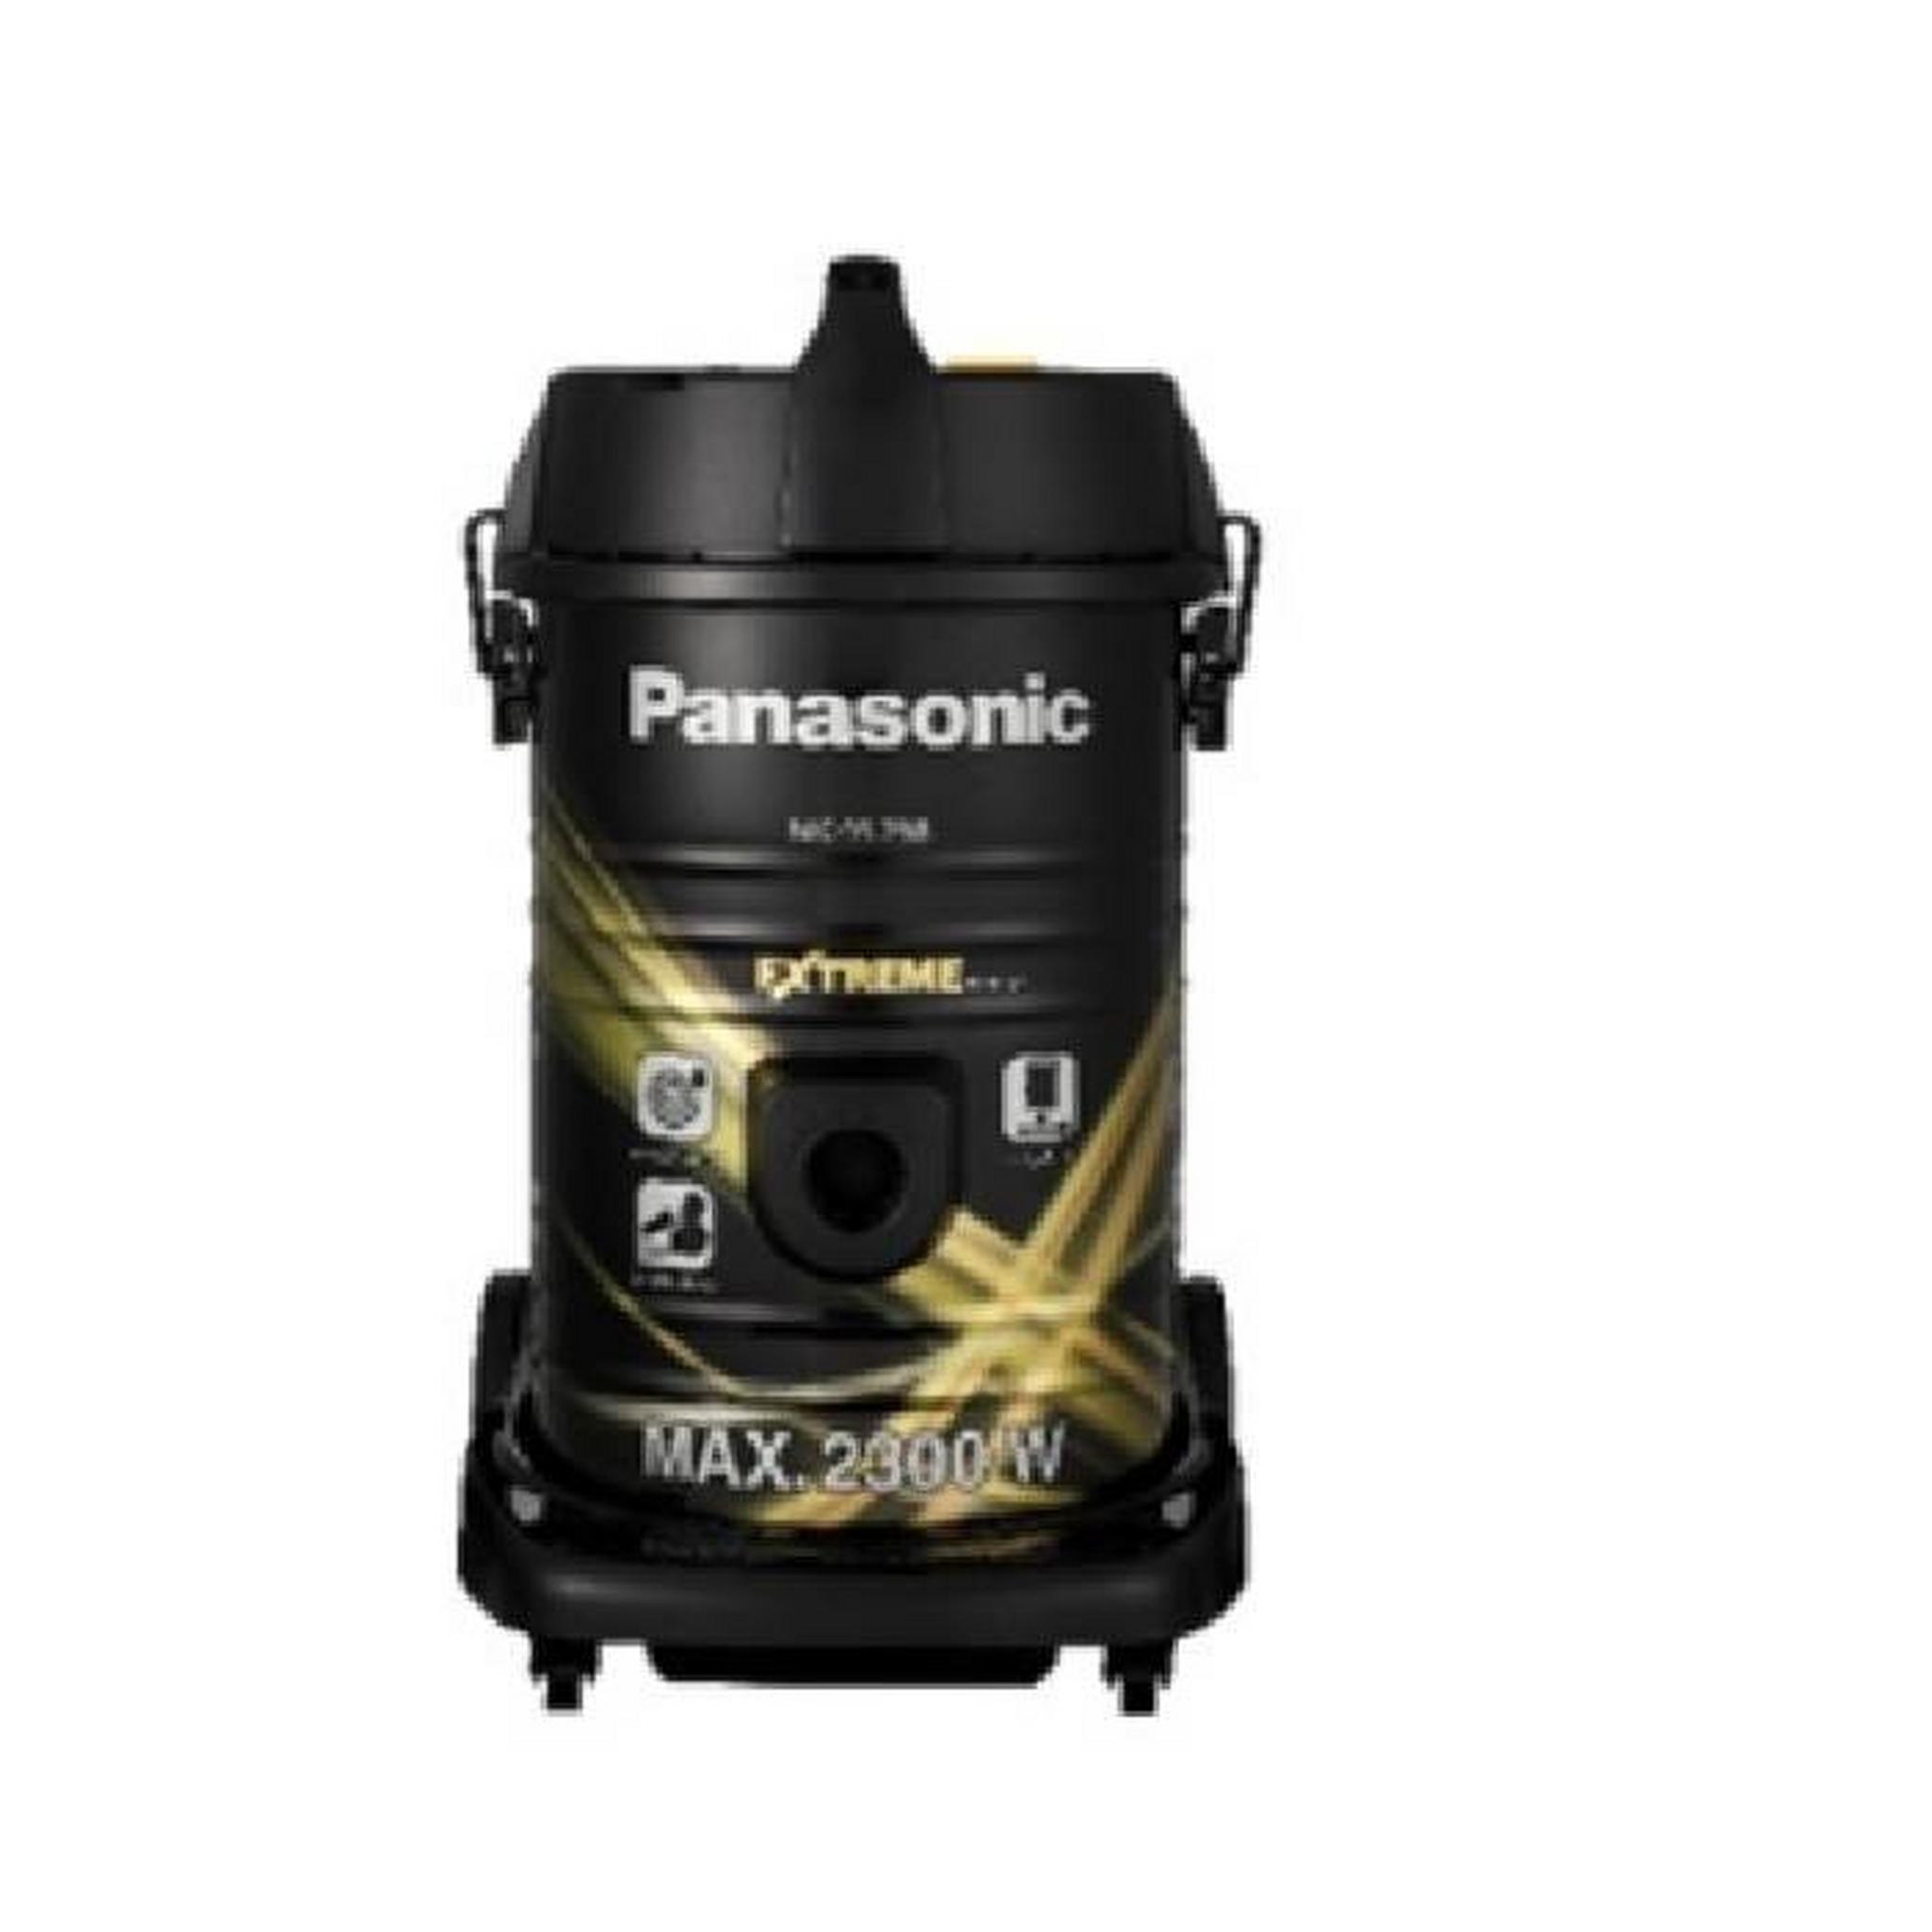 Panasonic  Drum Vacuum Cleaner, 2300 W, 21 Liters, MC-YL798NQ47 - Black/Gold